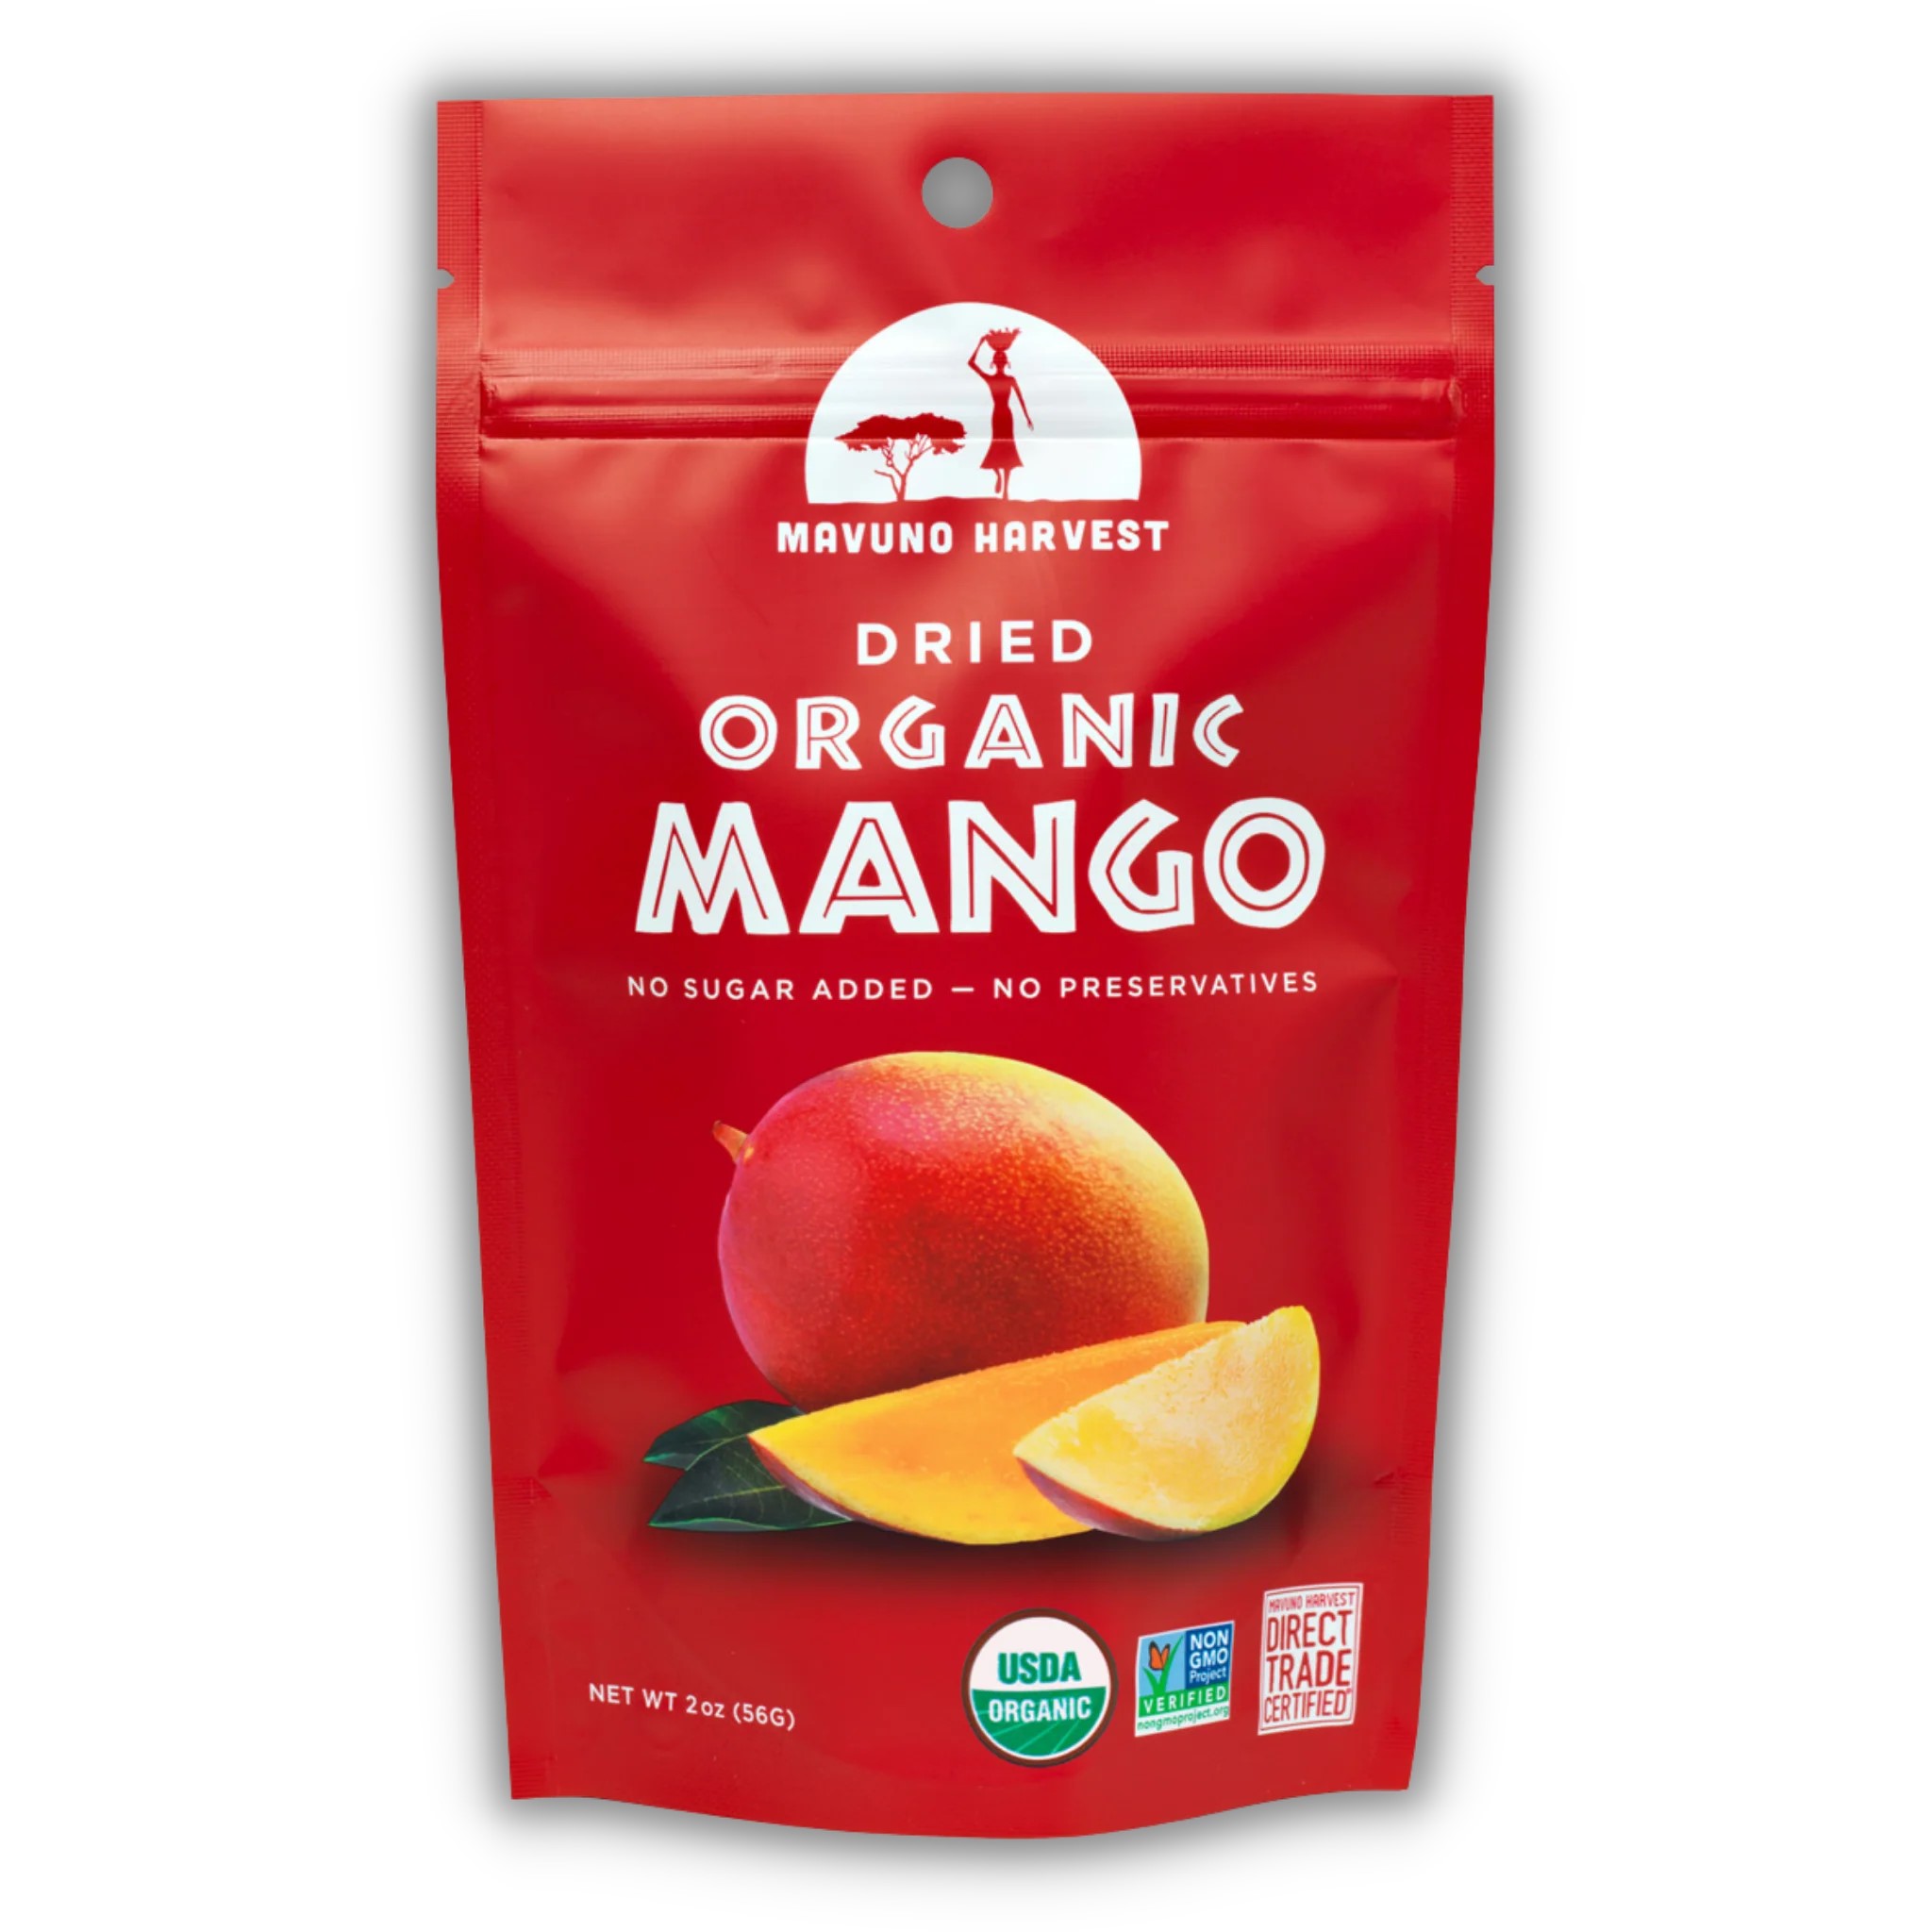 Mavuno Harvest Mango Organic 57G